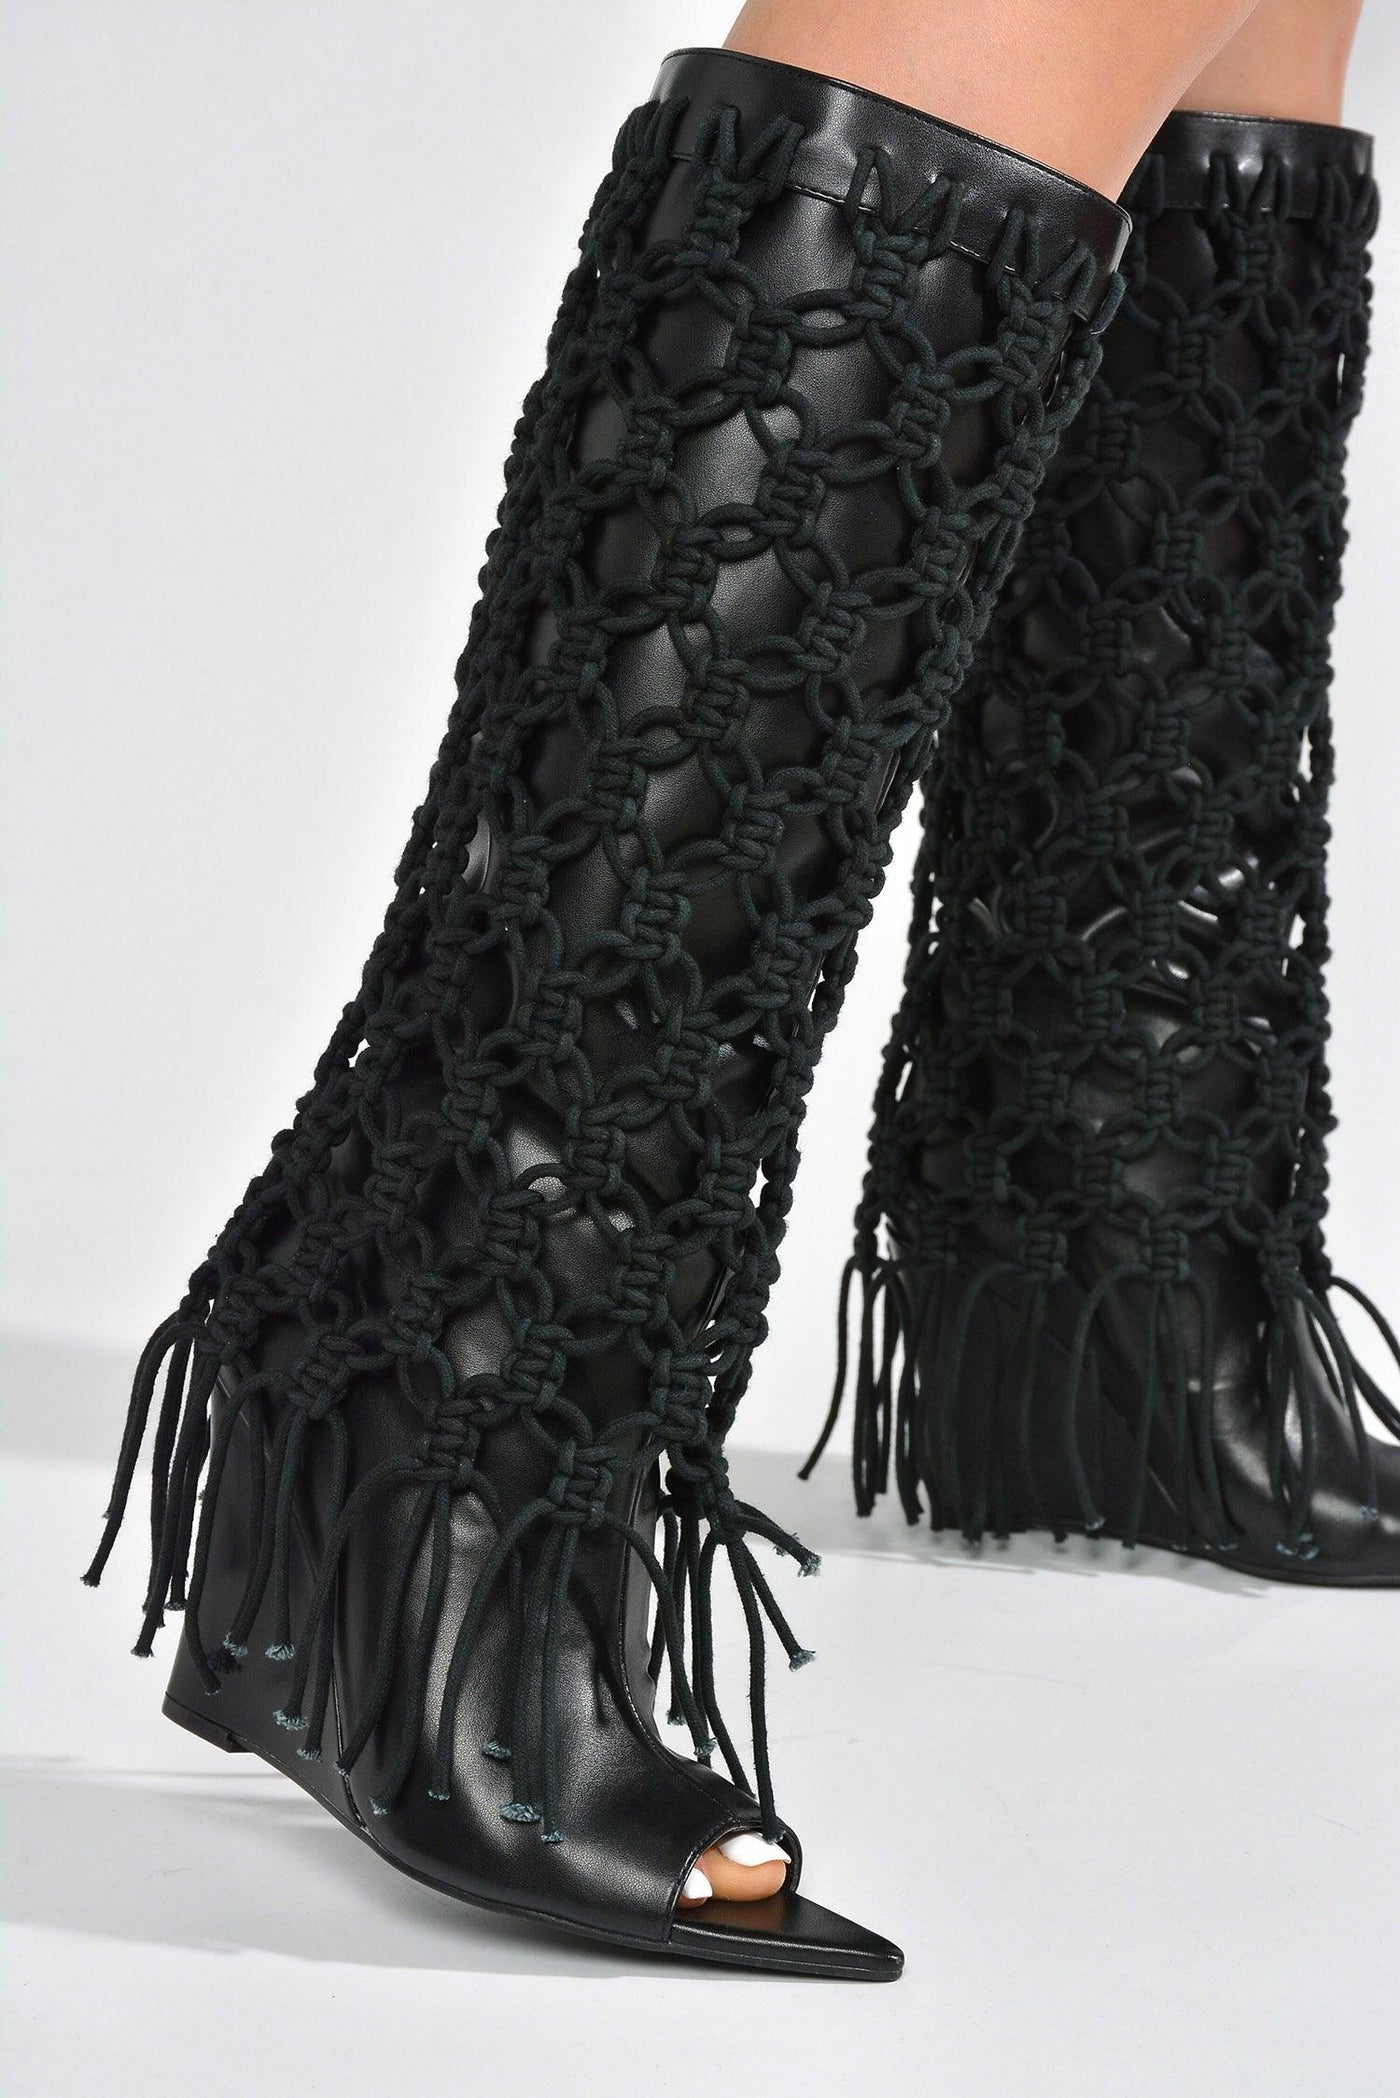 MONEMI - BLACK Thigh High Boots - AMIClubwear